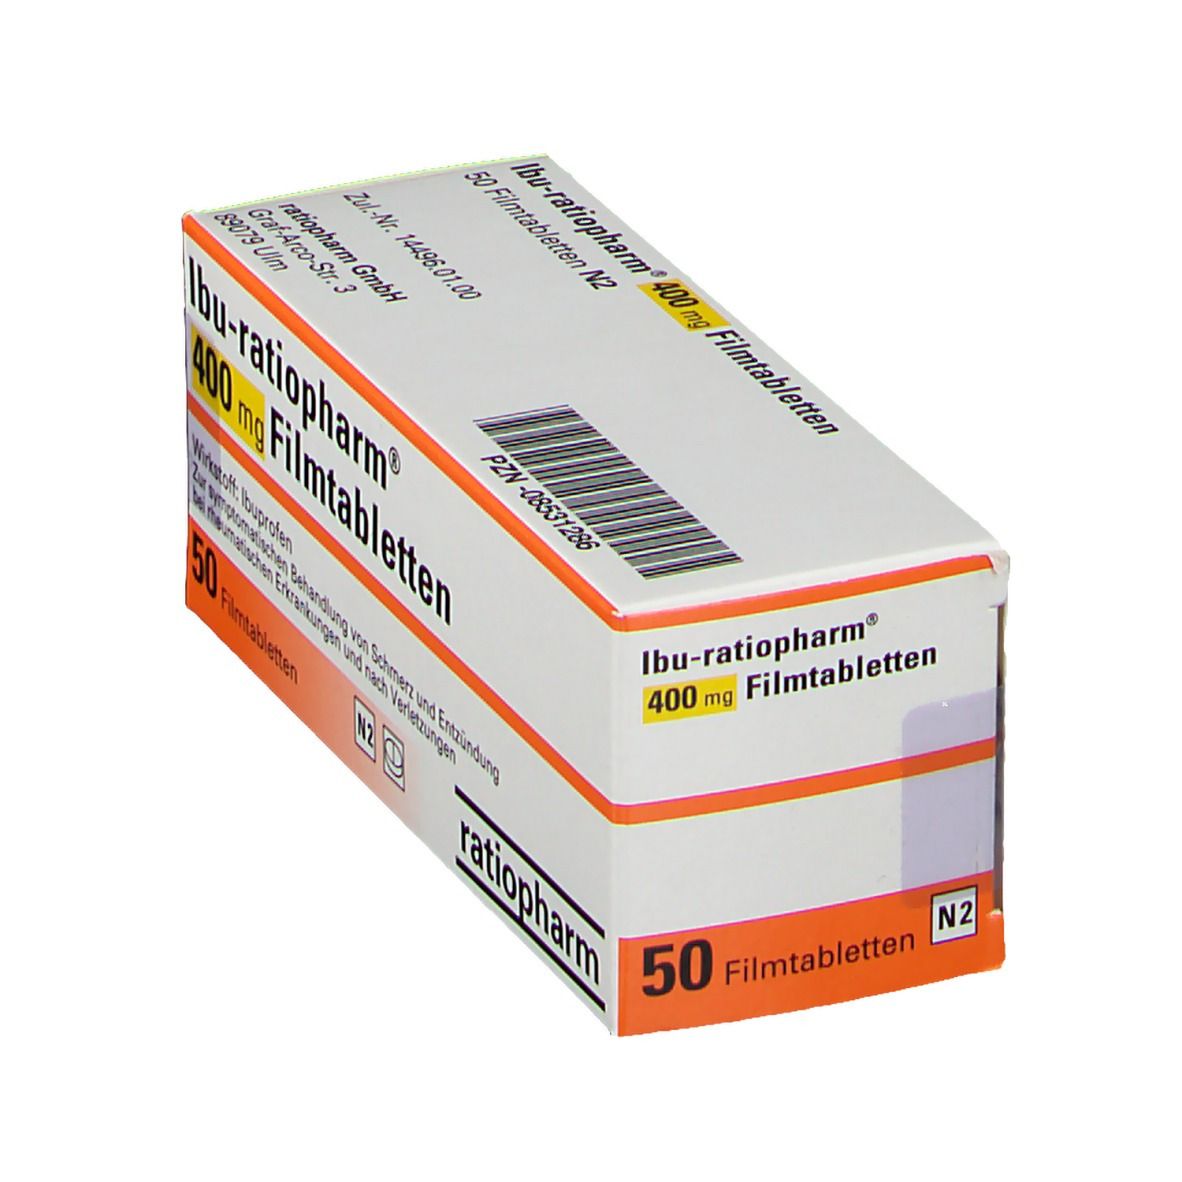 Ibu-ratiopharm® 400 mg